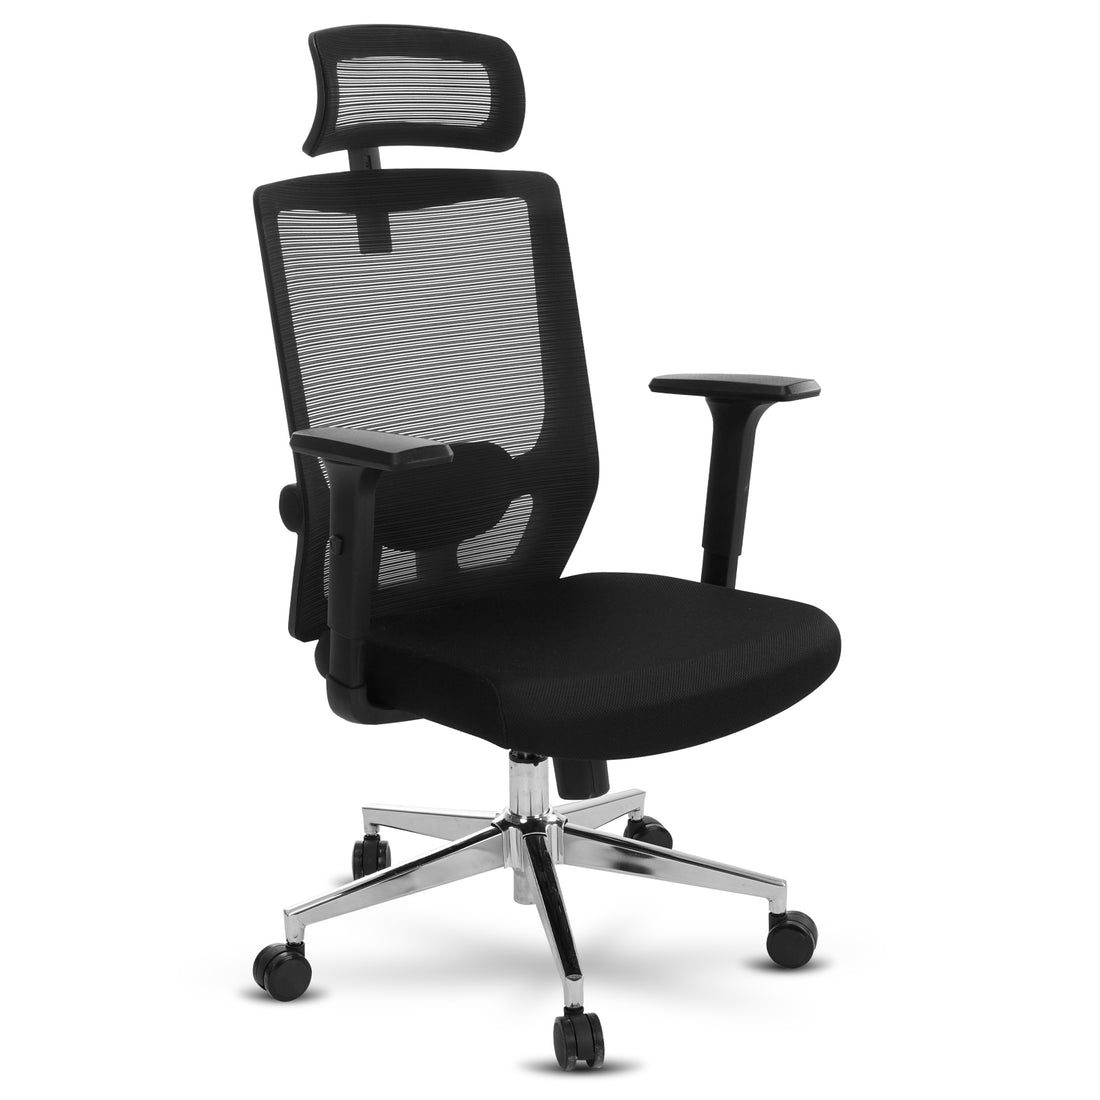 Ergonomic Office Chair with Adjustable Headrest